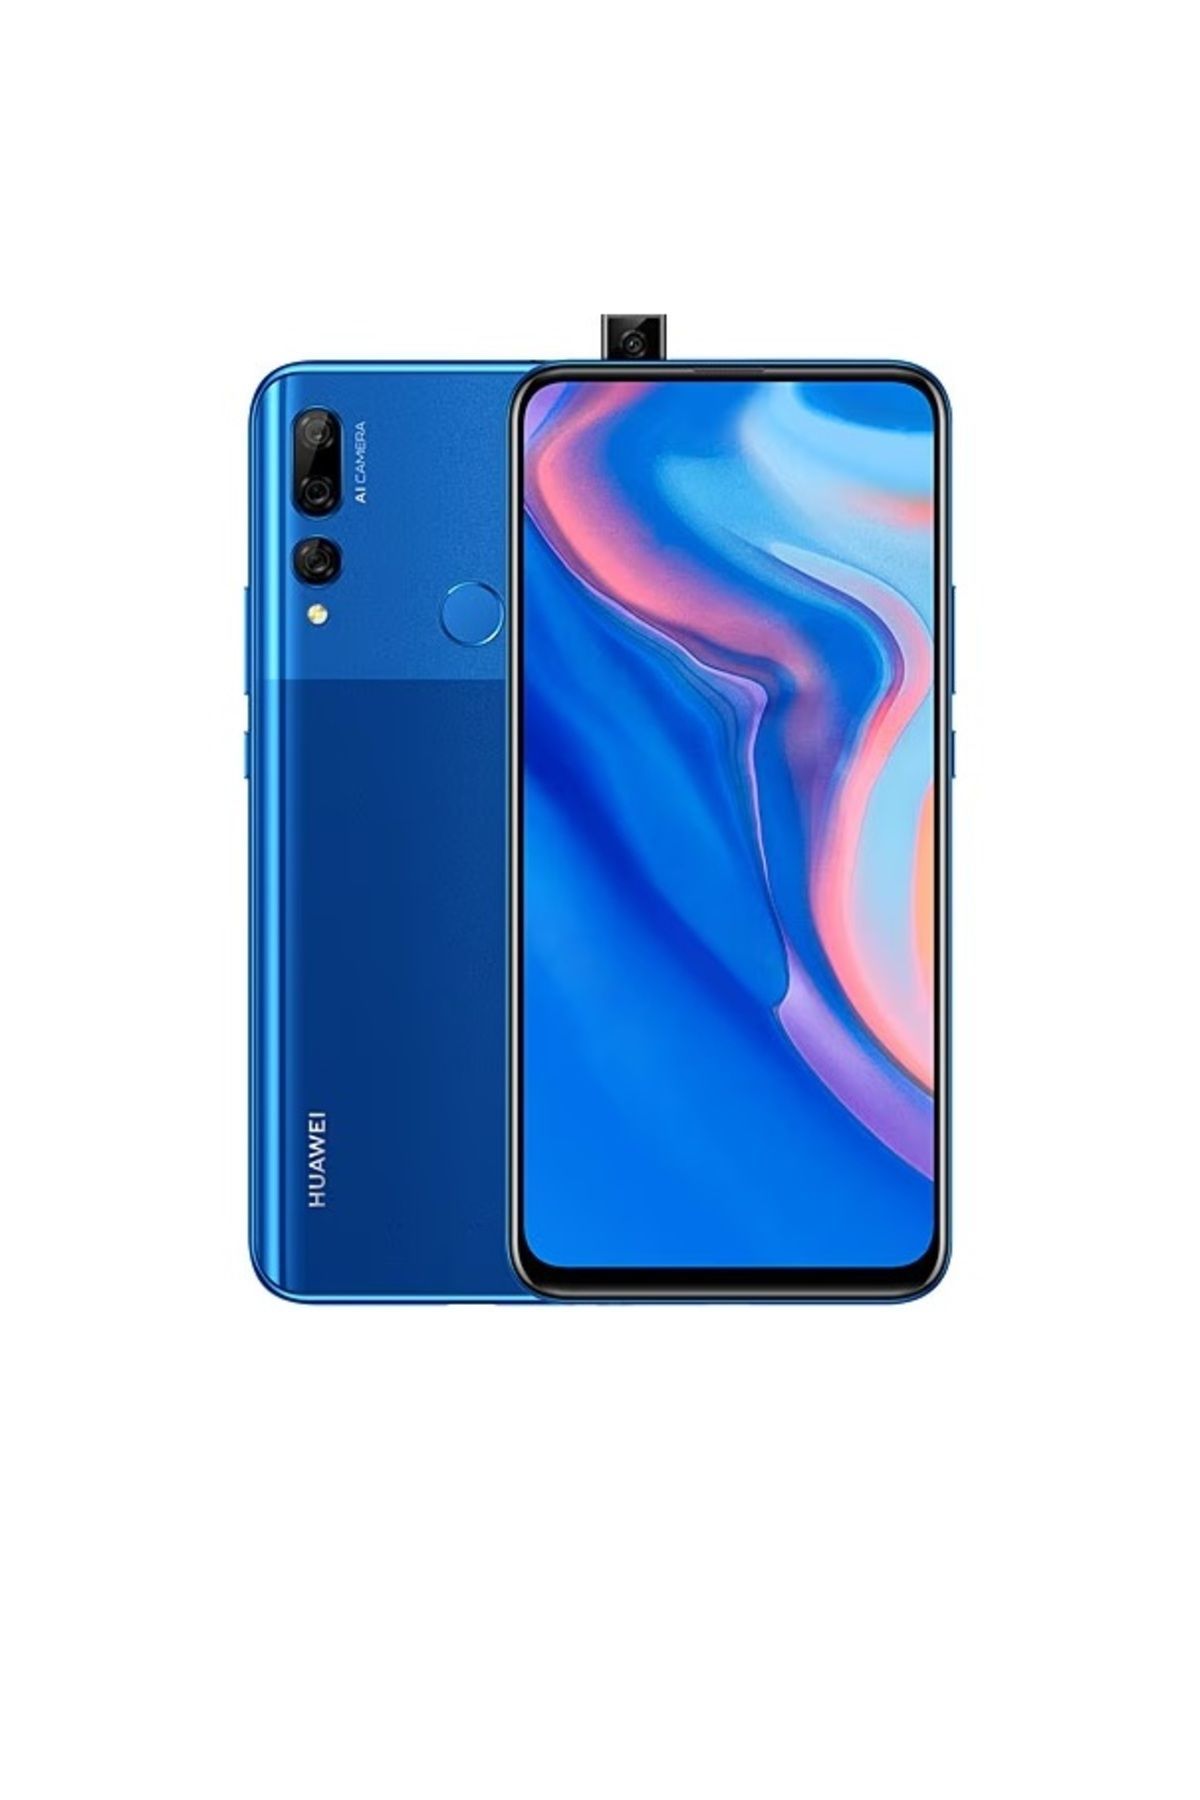 Yenilenmiş Huawei Y9 Prime 2019 128 GB Mavi-A Kategori